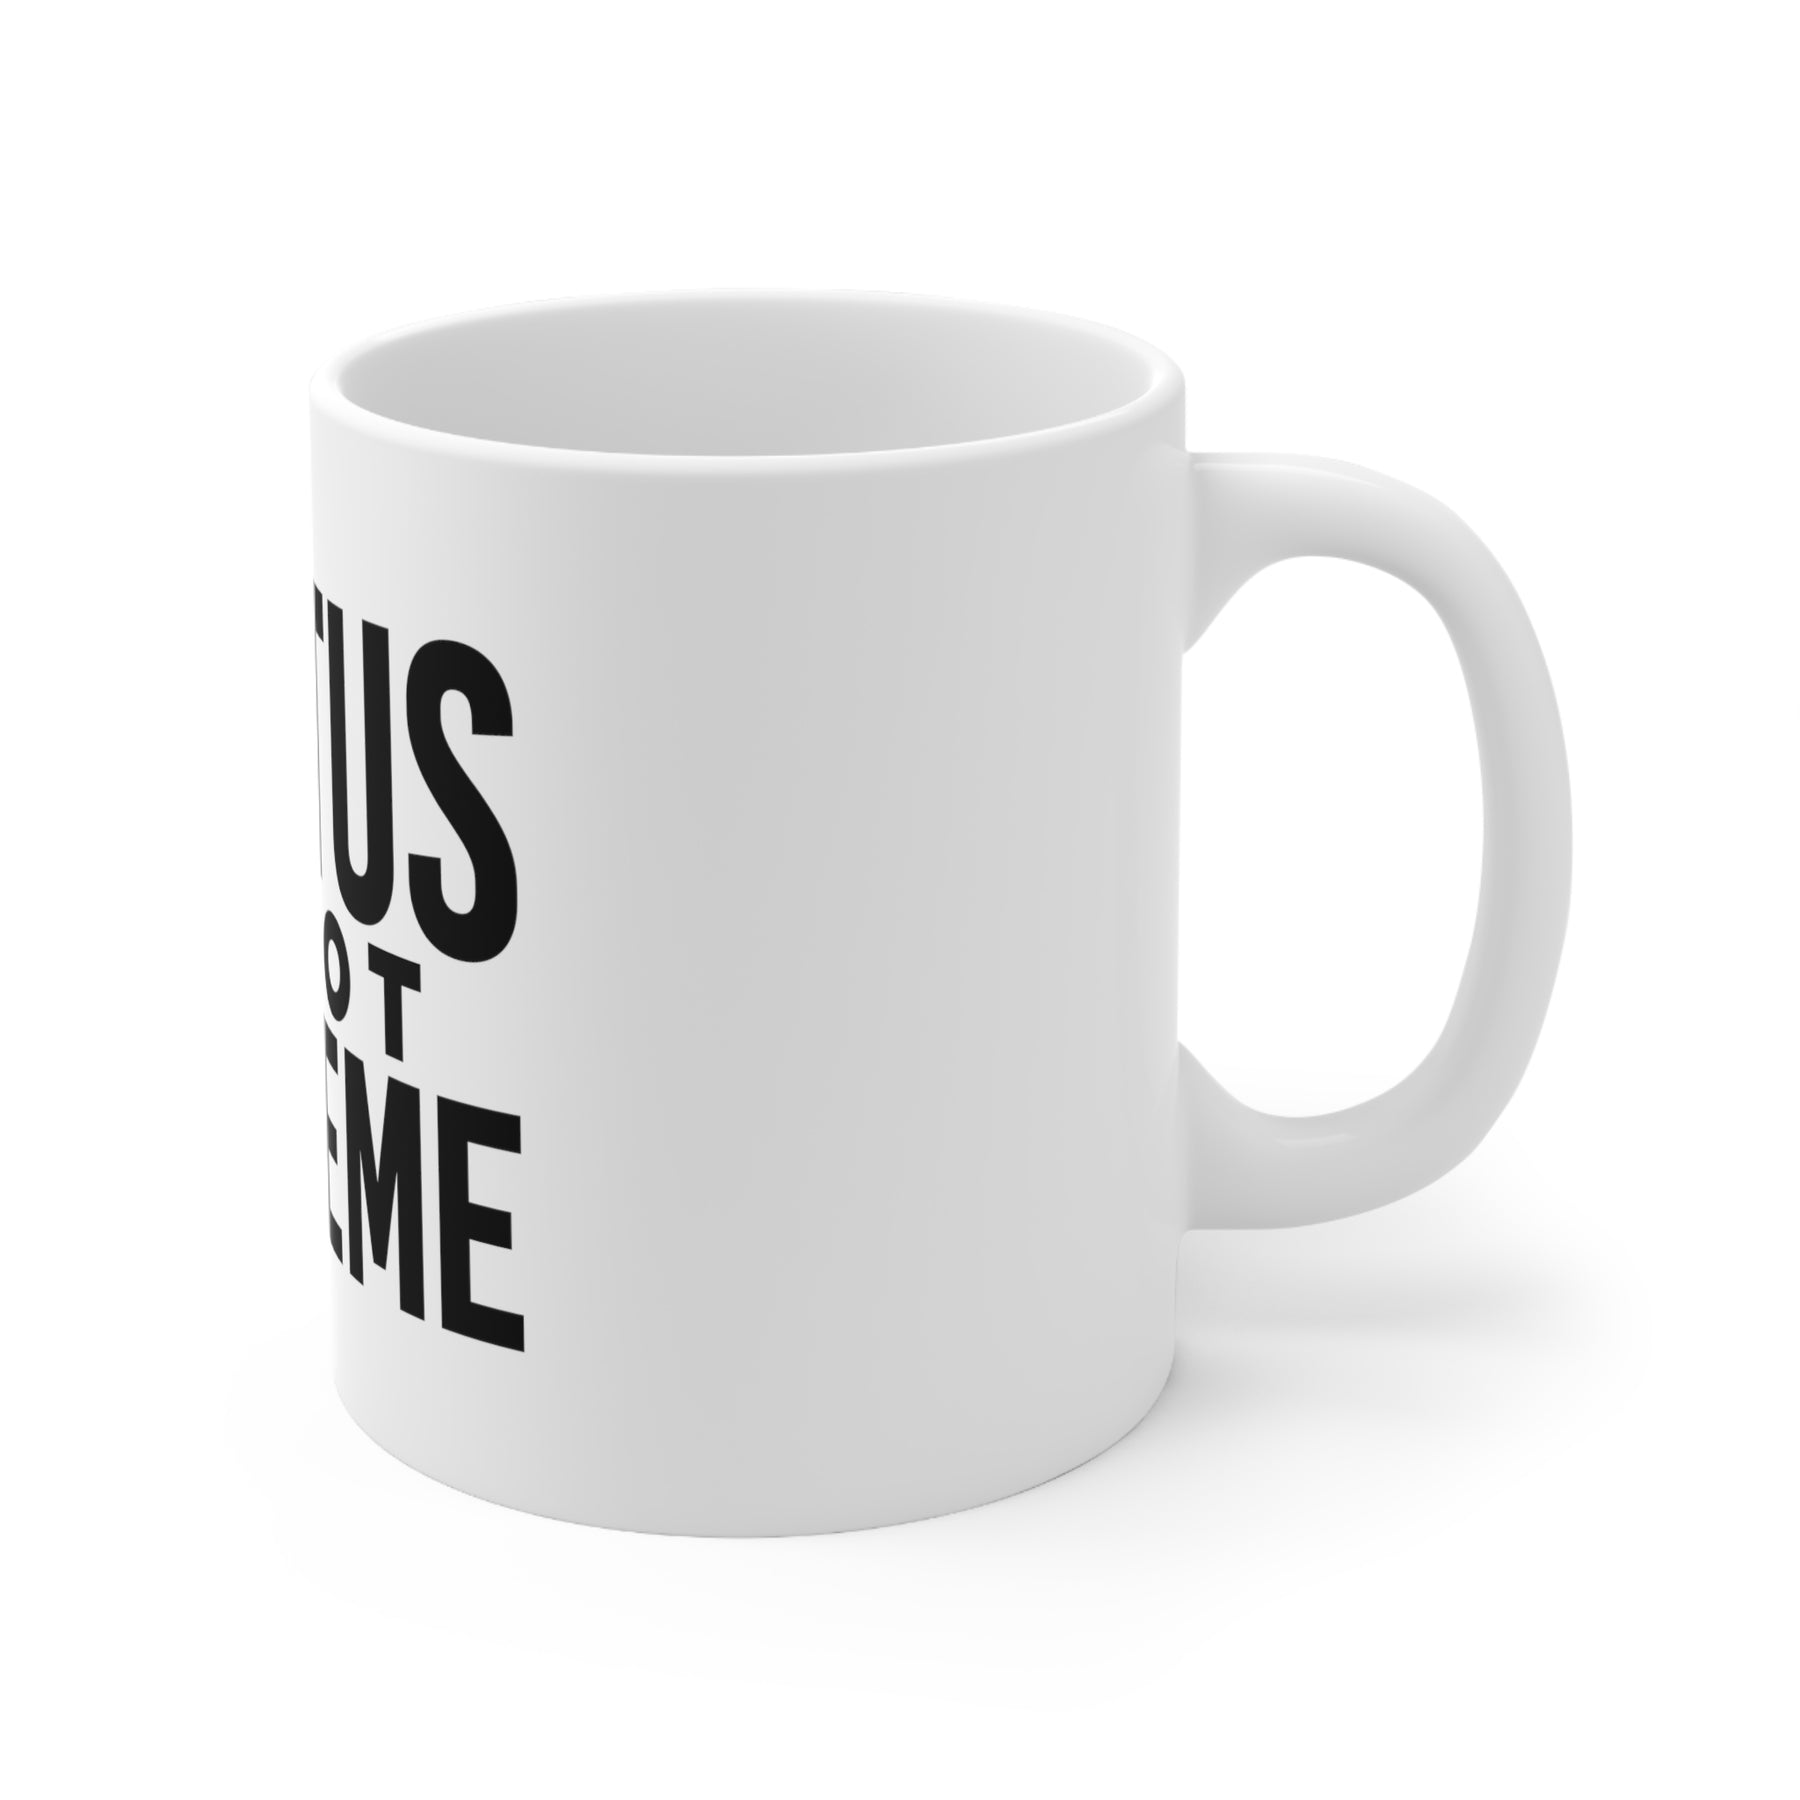  Chad Meme Classic Mug - 11 Ounce For Coffee, Tea